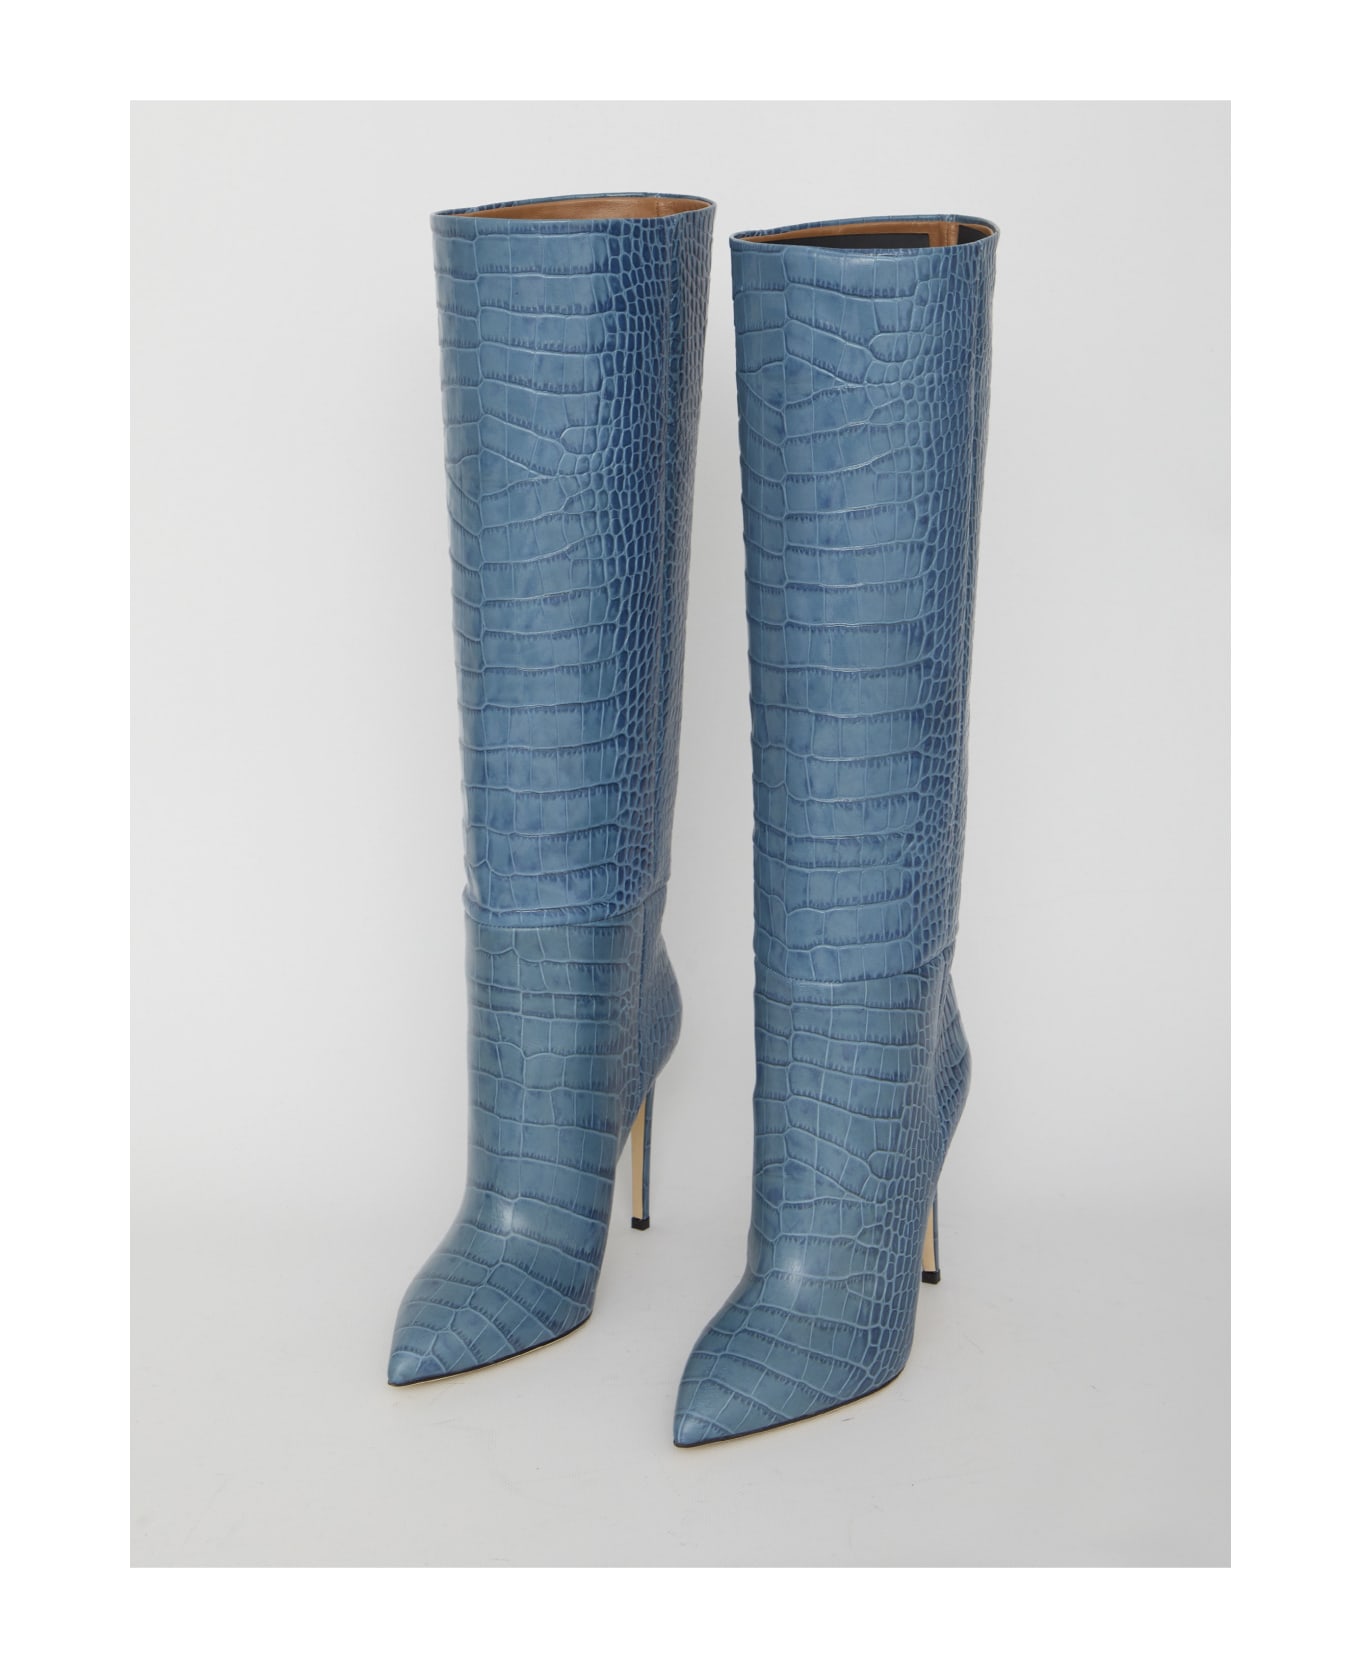 Paris Texas Light-blue Leather Boots - LIGHT BLUE ブーツ